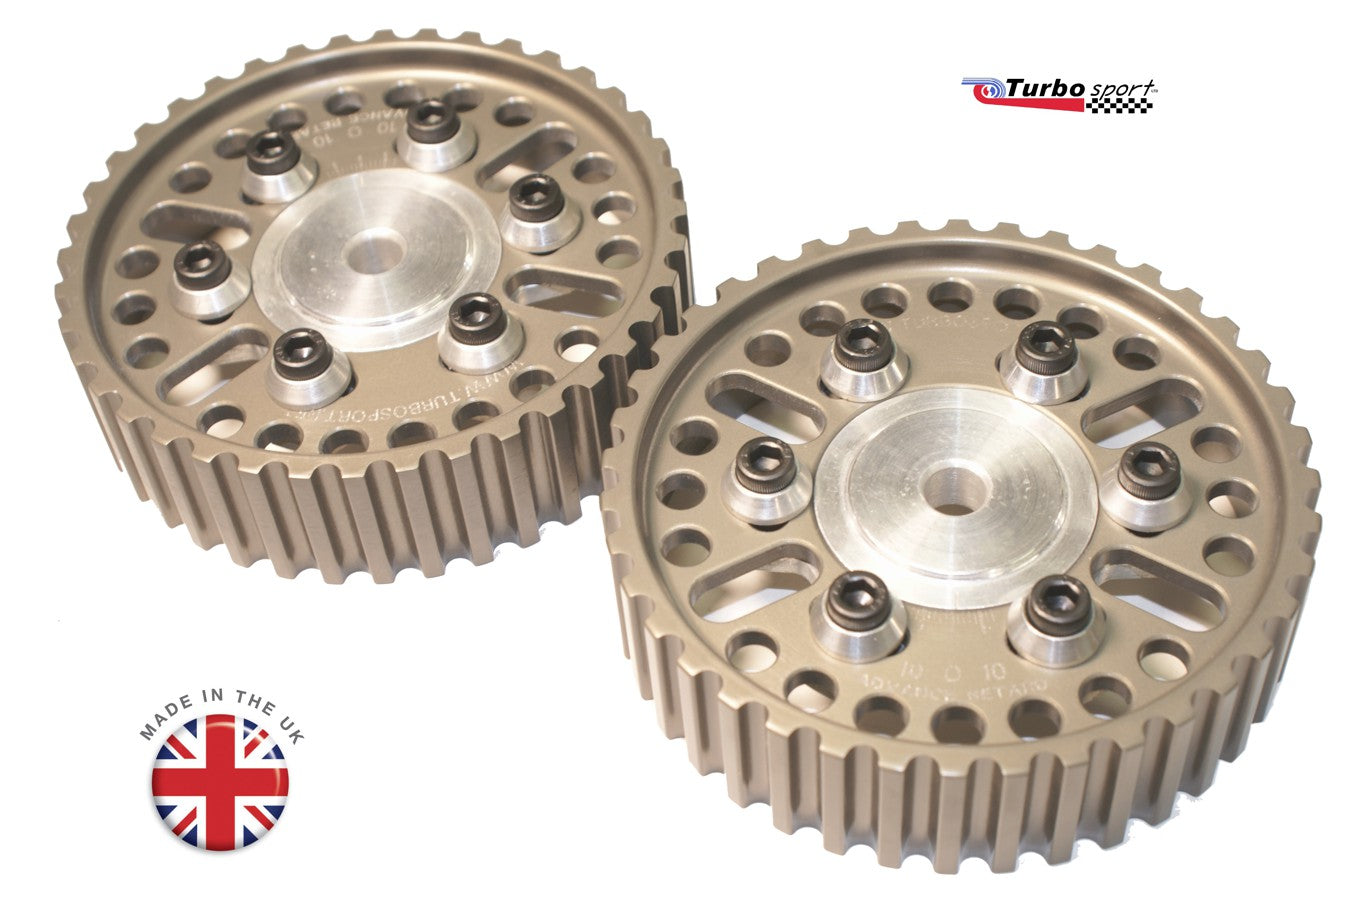 TurboSport UK Adjustable Cam Gear - Ford Zetec Engine 2.0 - Massive Speed System